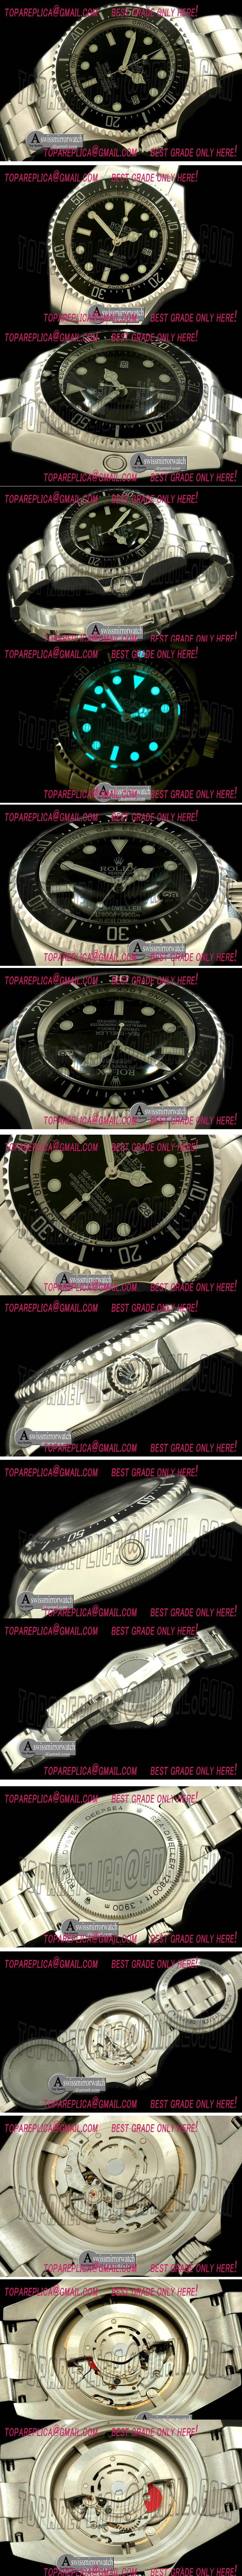 Replica Rolex Sea Dweller Watches